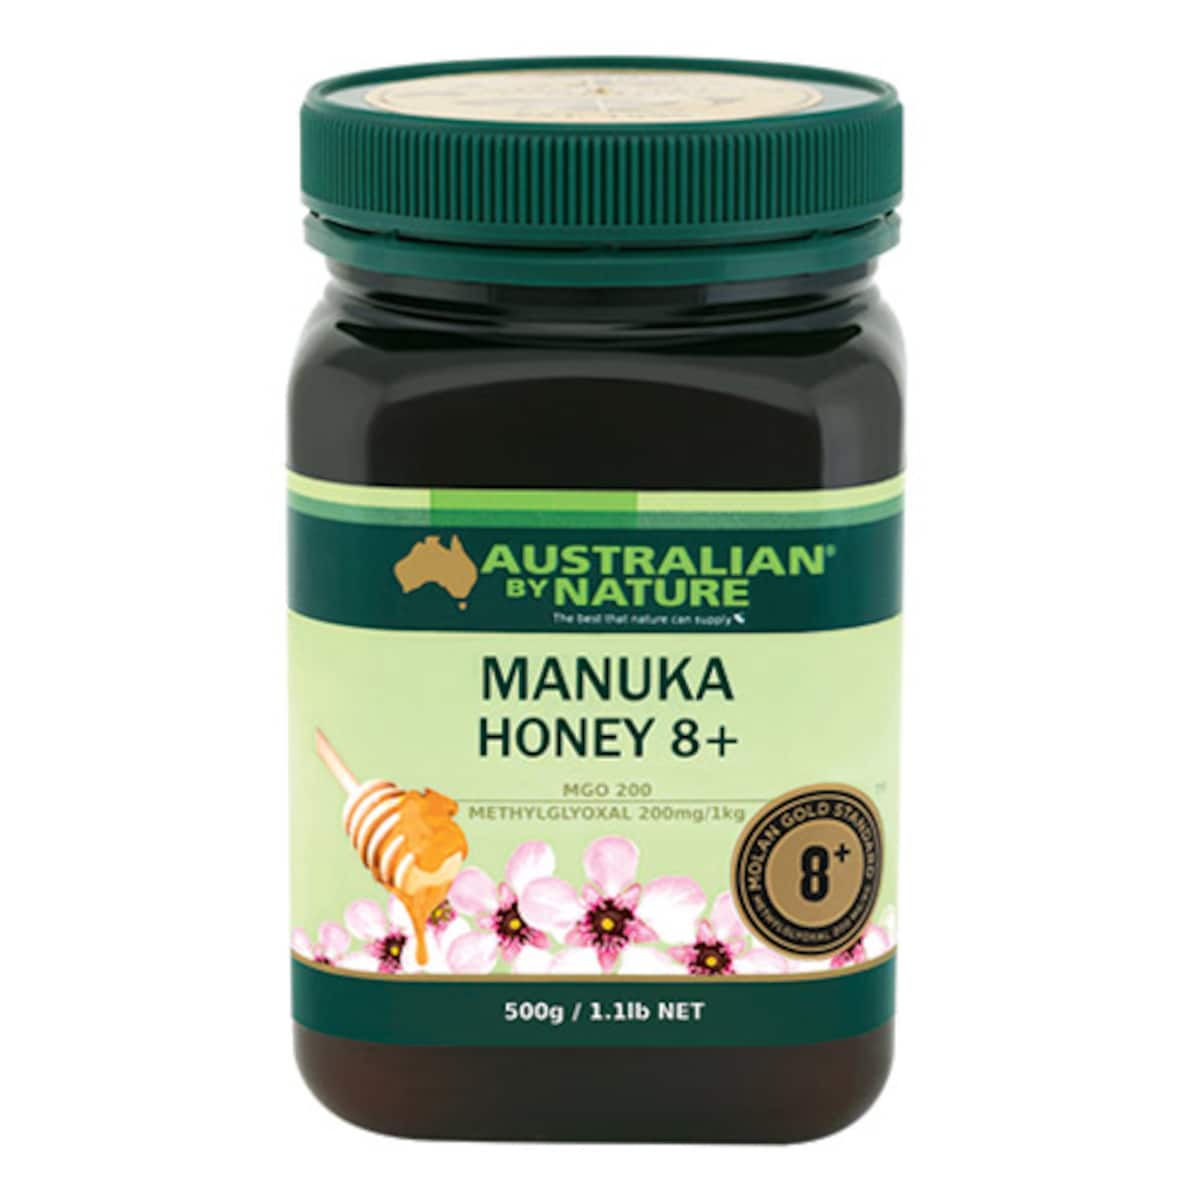 Australian by Nature Manuka Honey 8+ (MGO 200) 500g